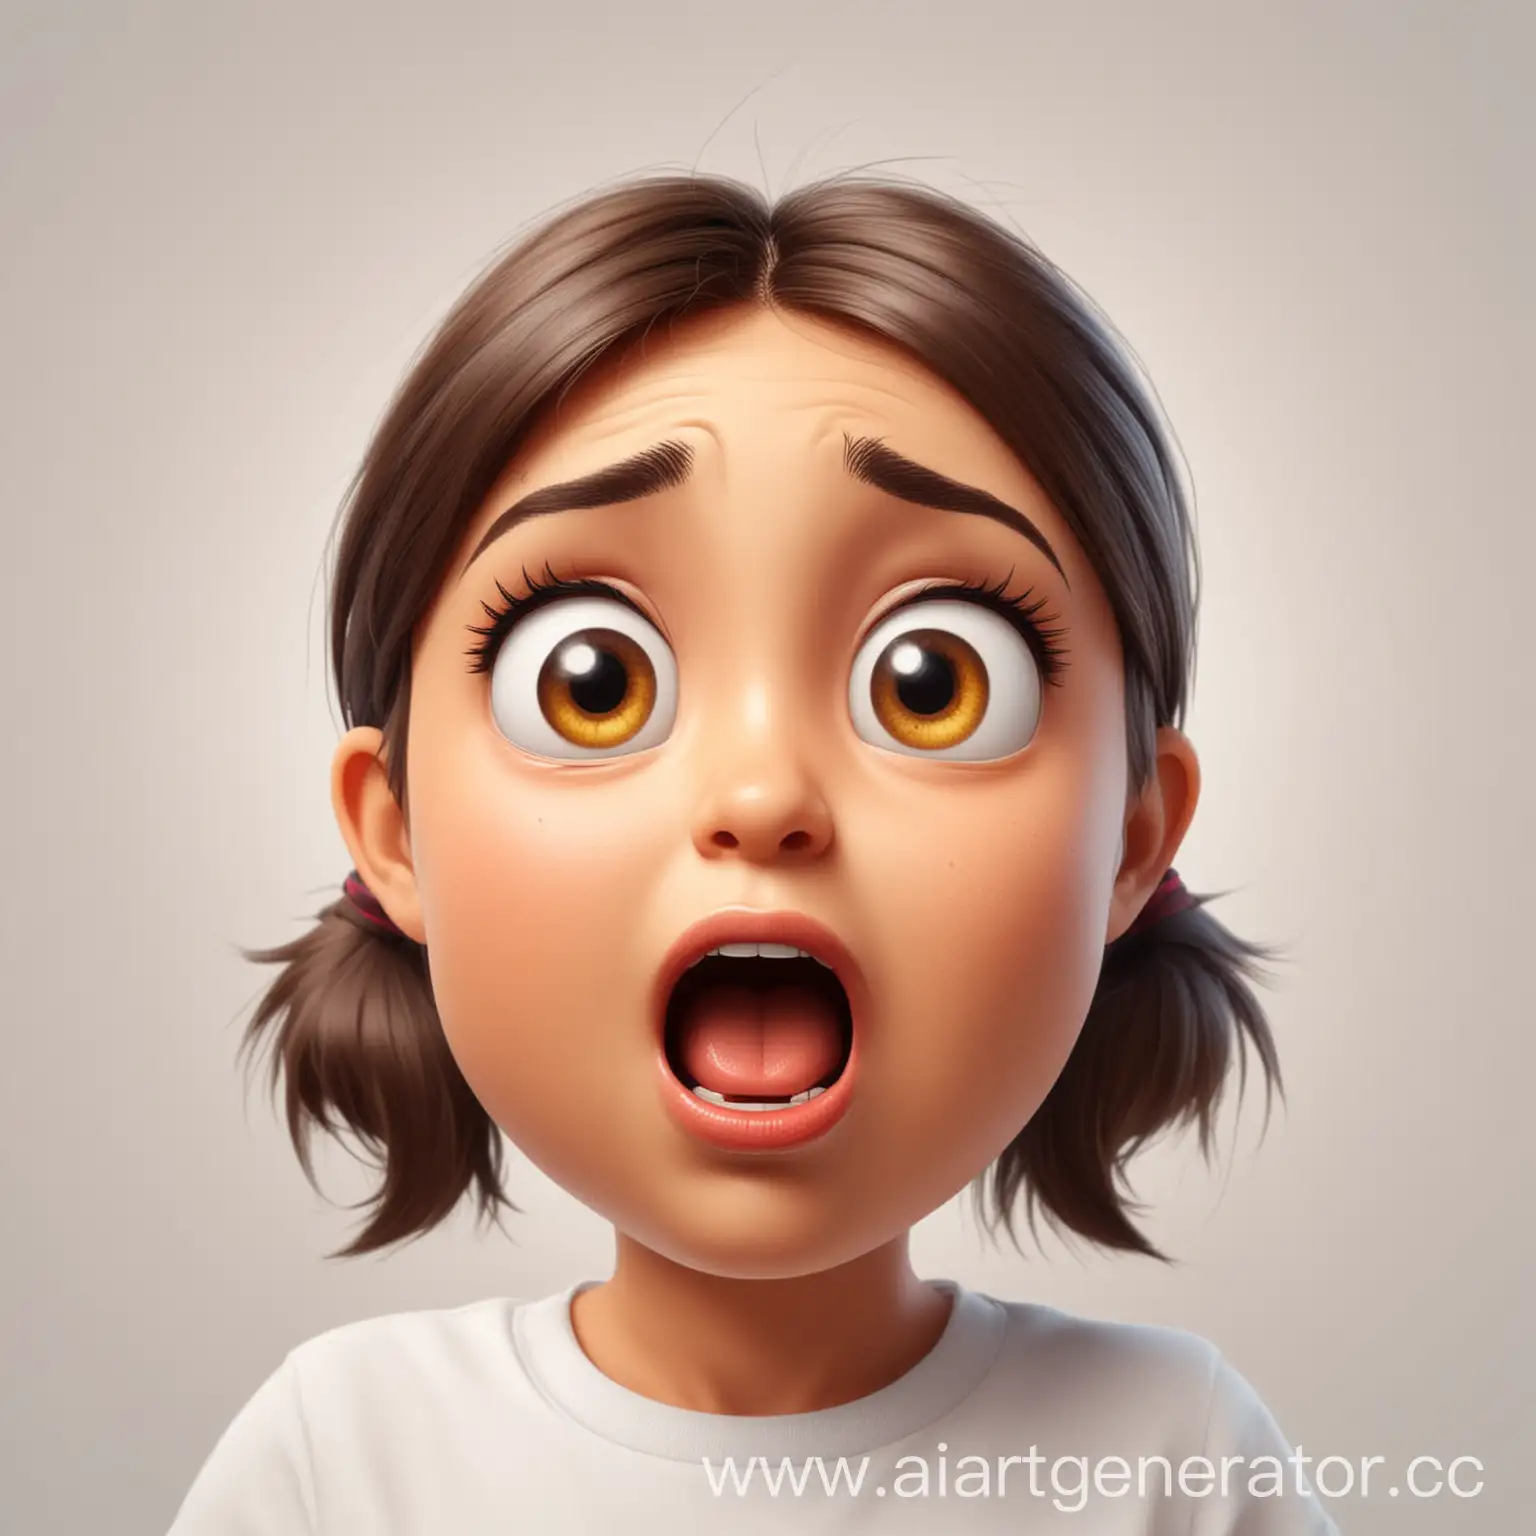 Surprised-Cartoon-Emoji-Girl-on-White-Background